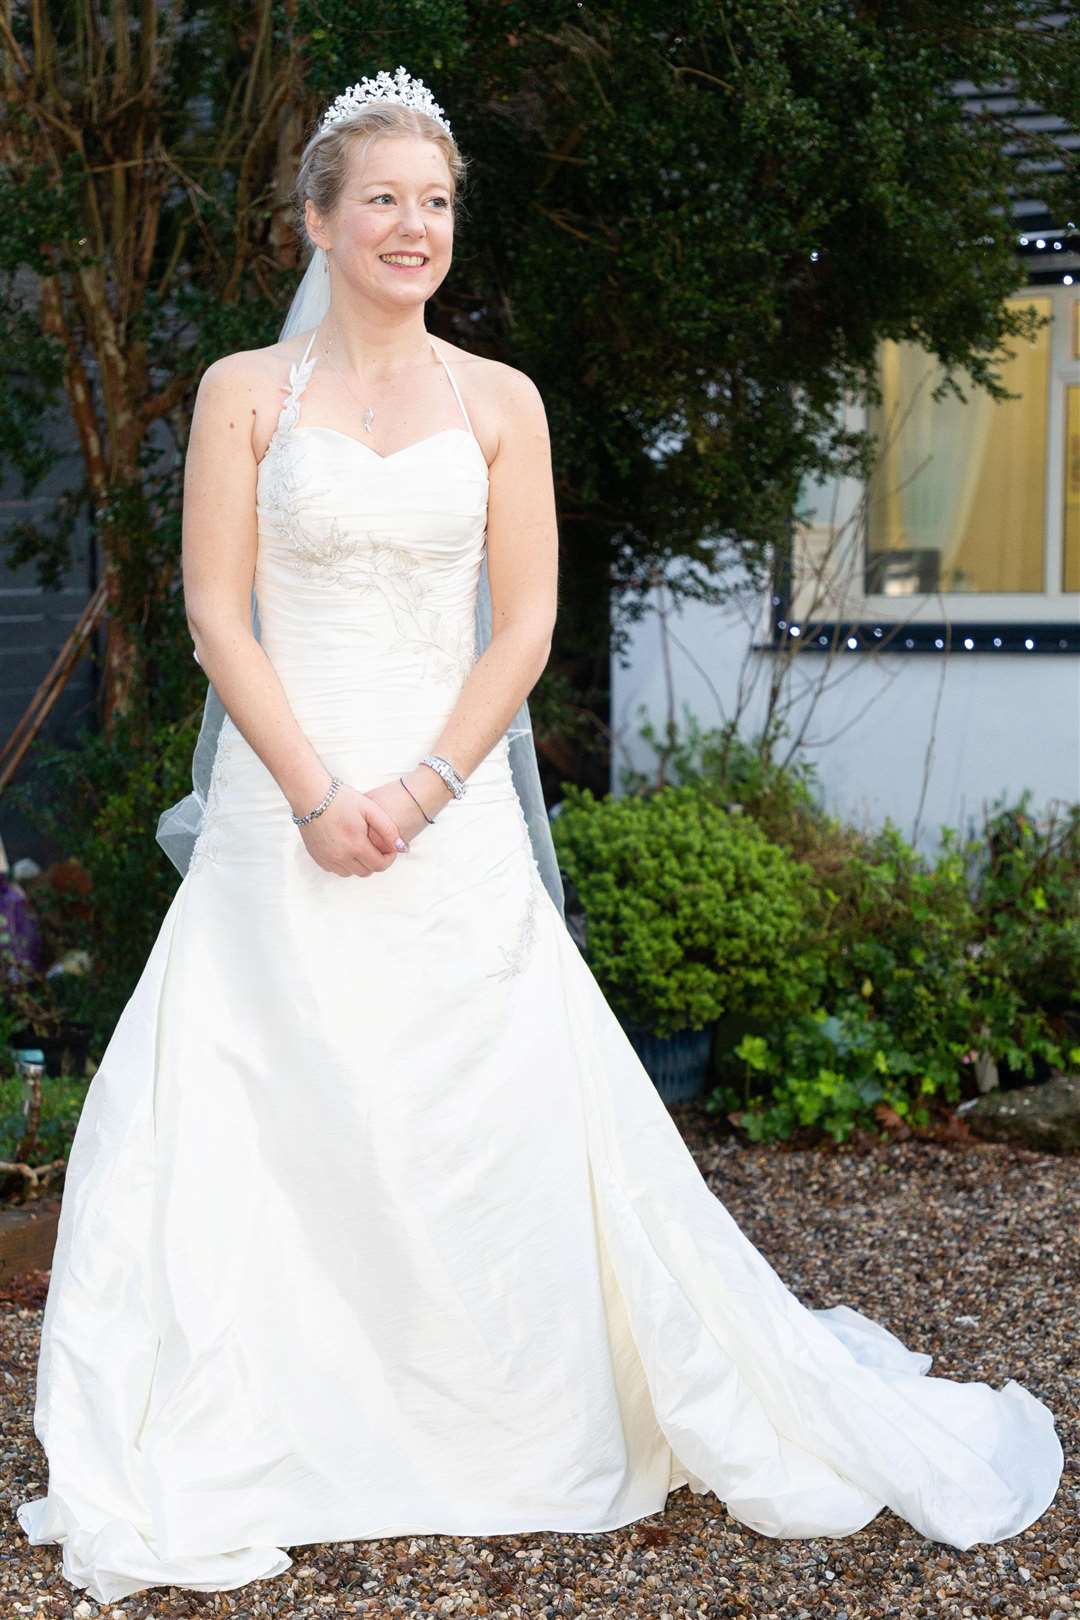 Sarah Elliott in her wedding dress